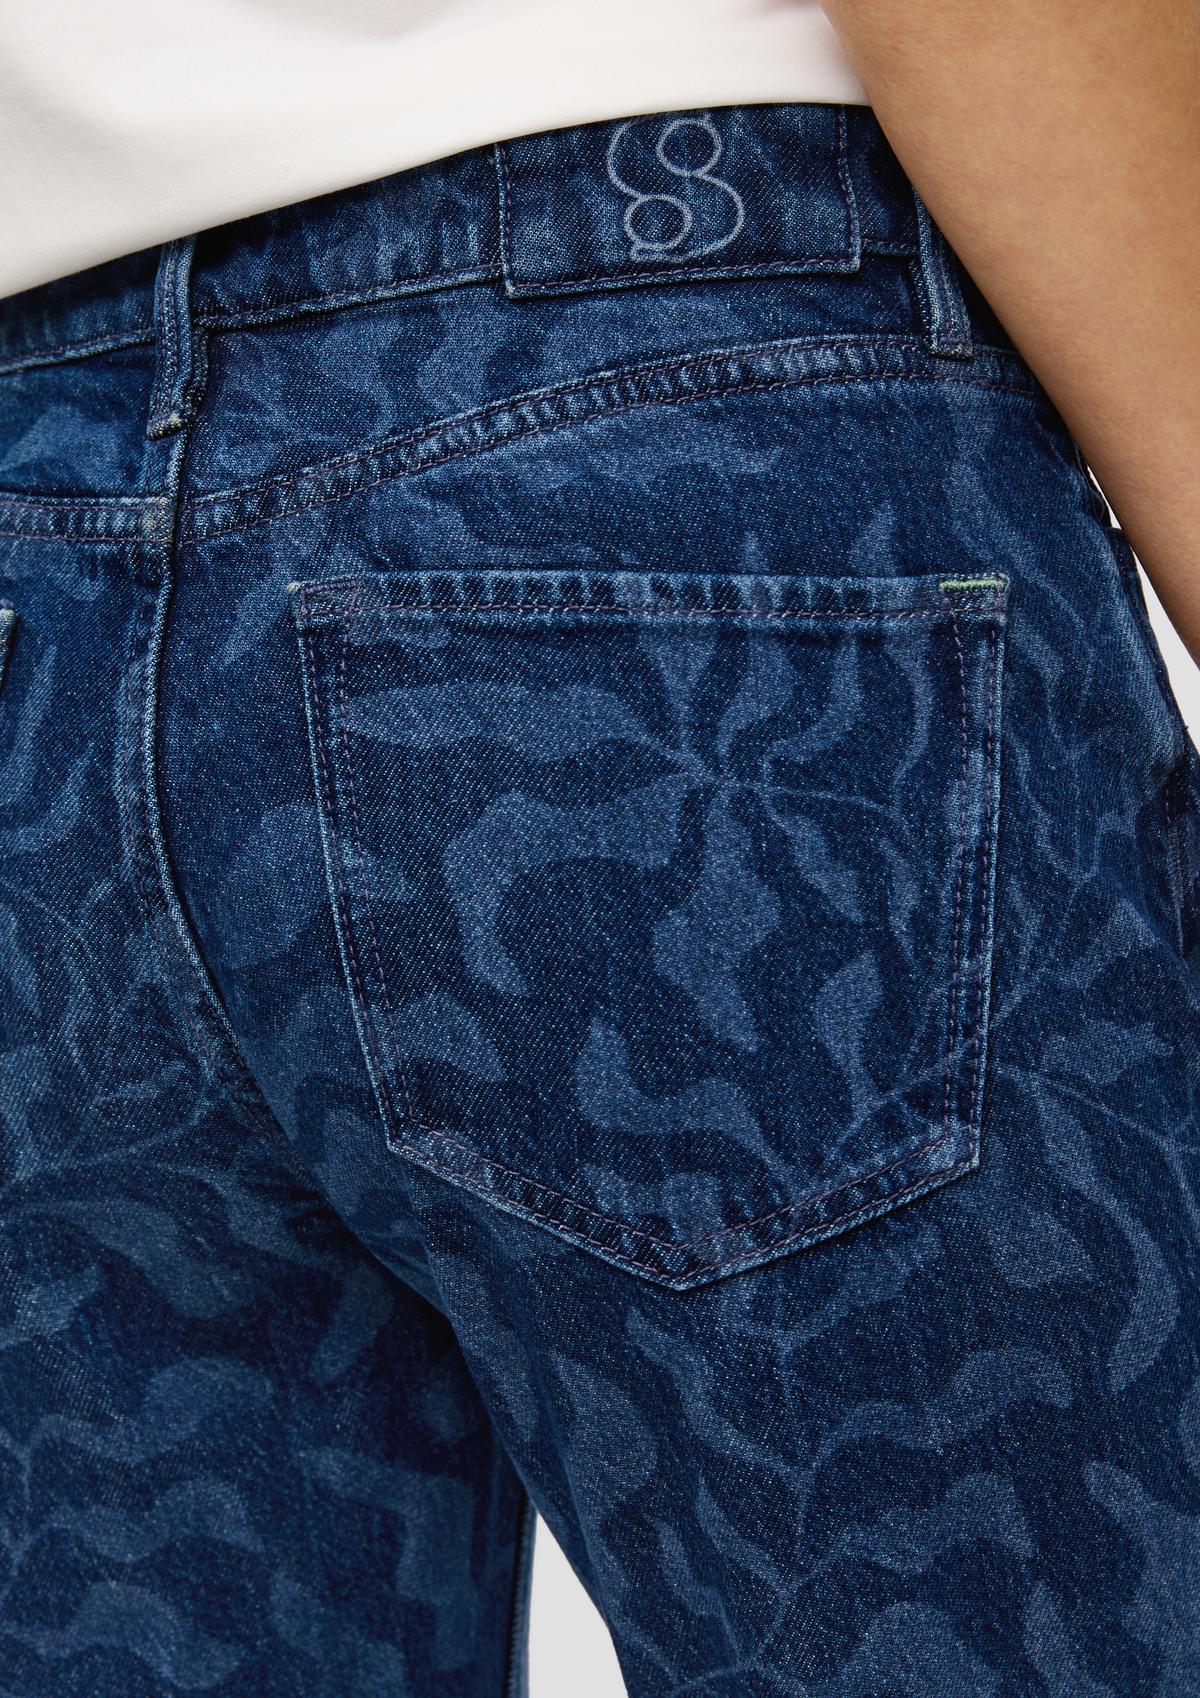 s.Oliver Jeans hlače Karolin / kroj Regular Fit / Mid Rise / Ravne hlačnice / Vzorec po celotnem oblačilu